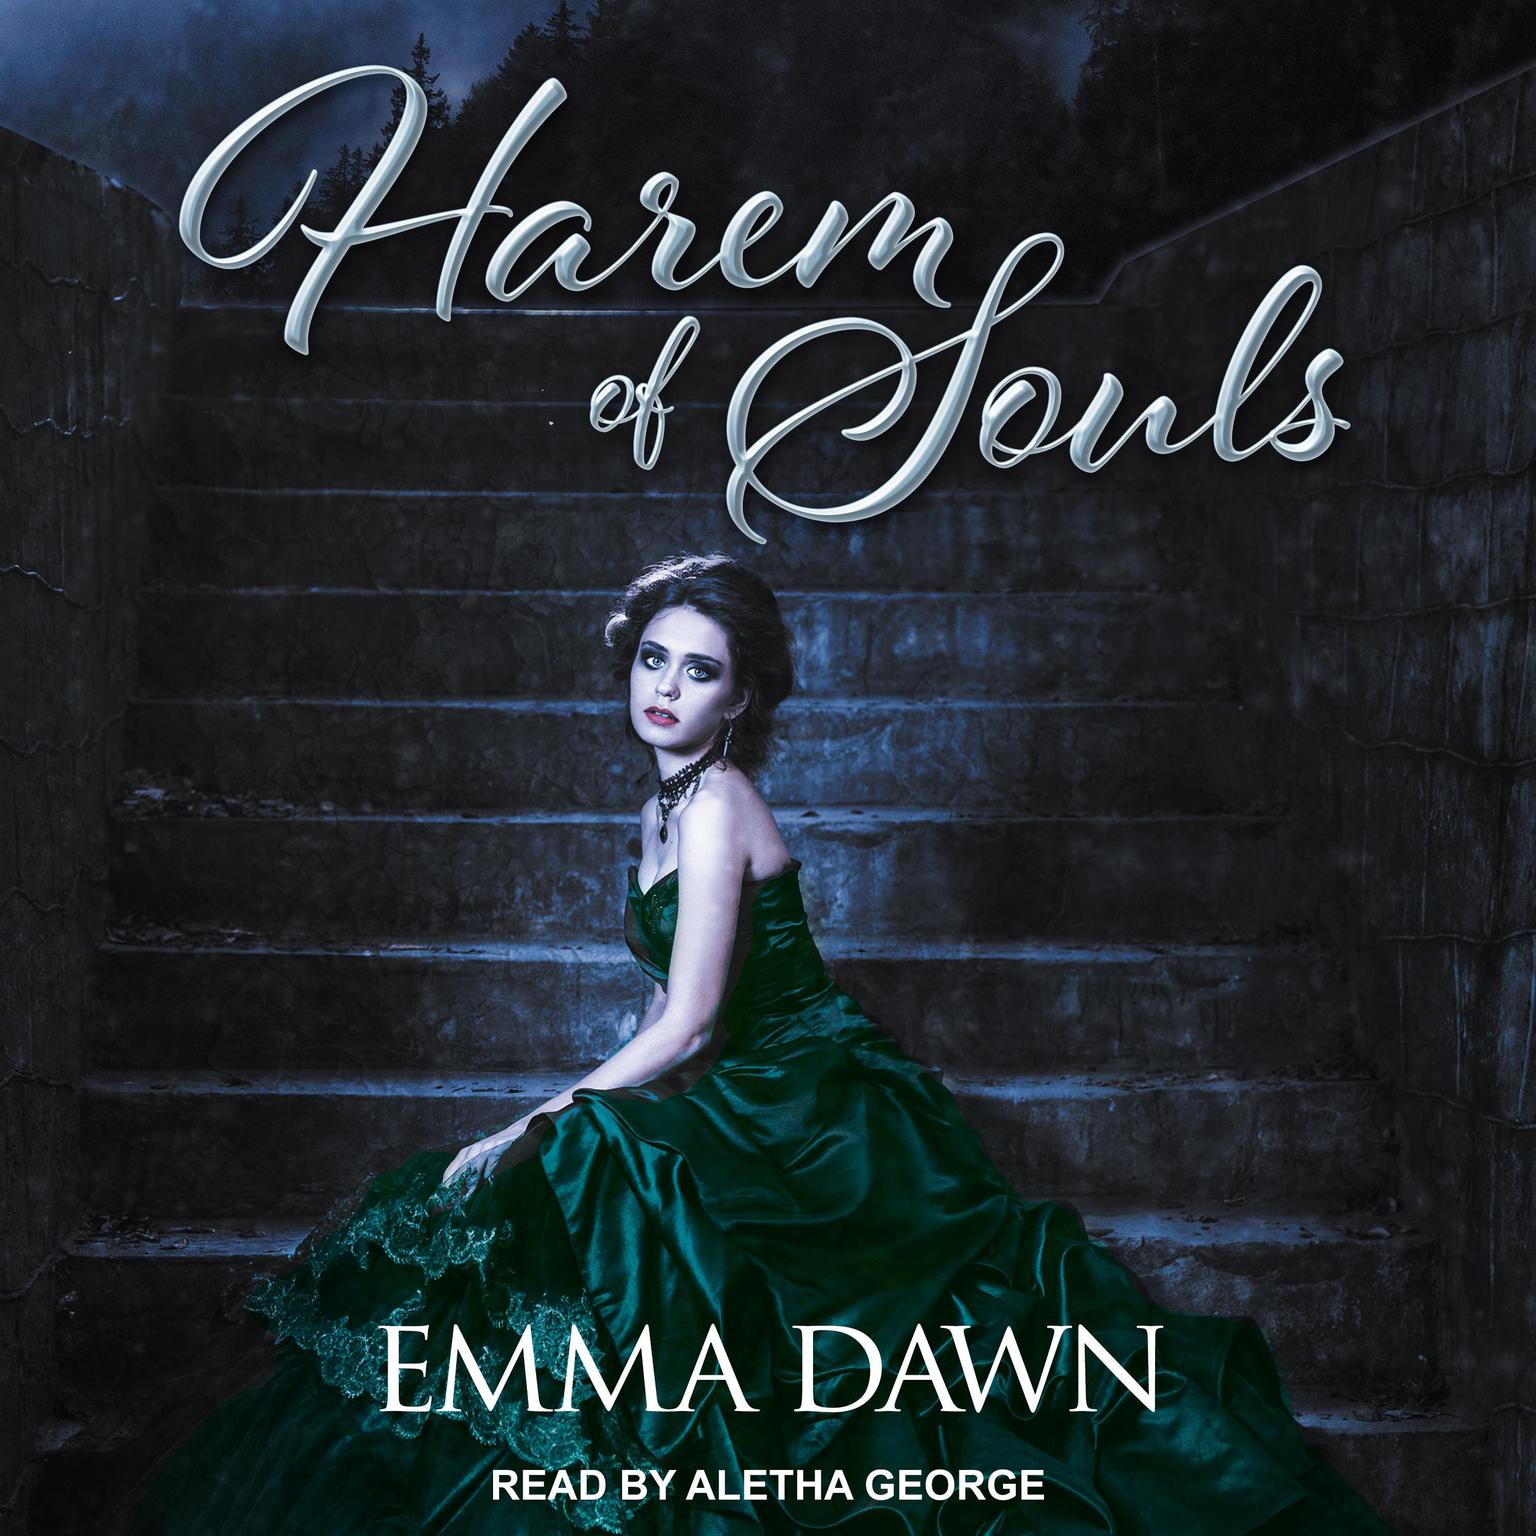 Harem of Souls Audiobook, by Emma Dawn